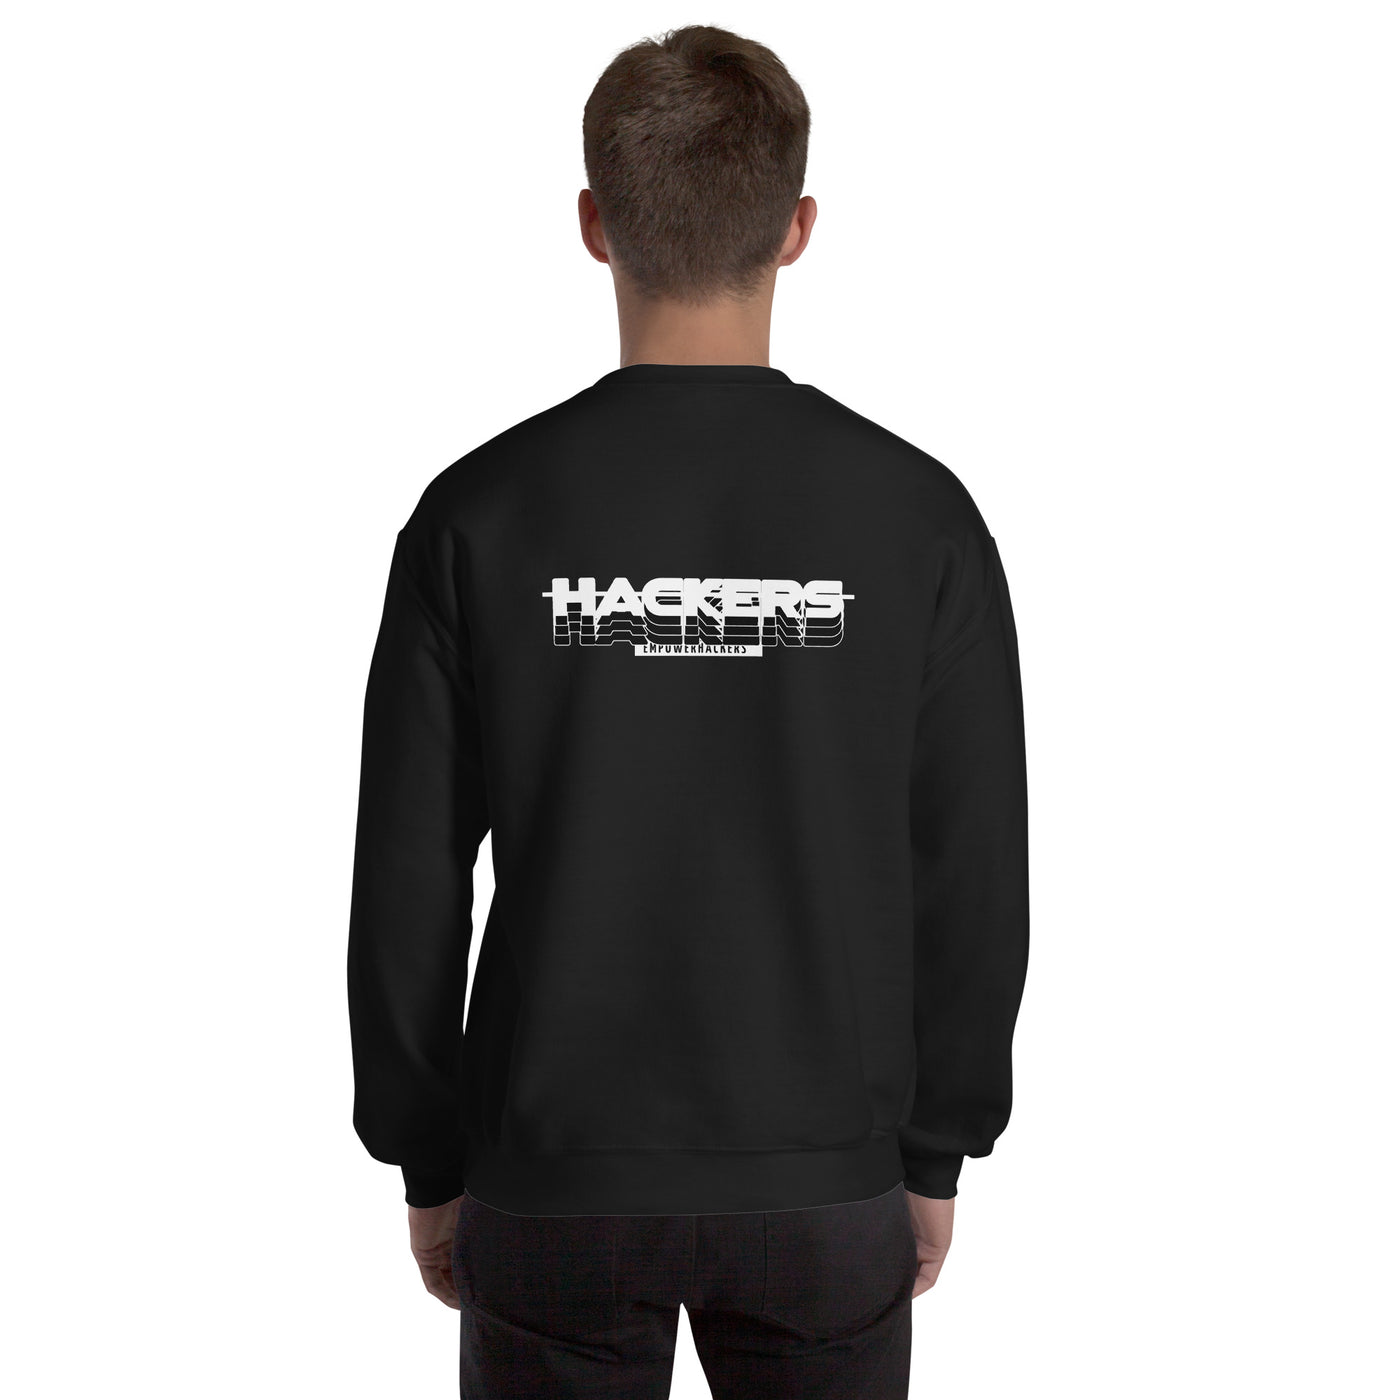 Hackers Empower Hackers V3 - Unisex Sweatshirt ( Back Print )